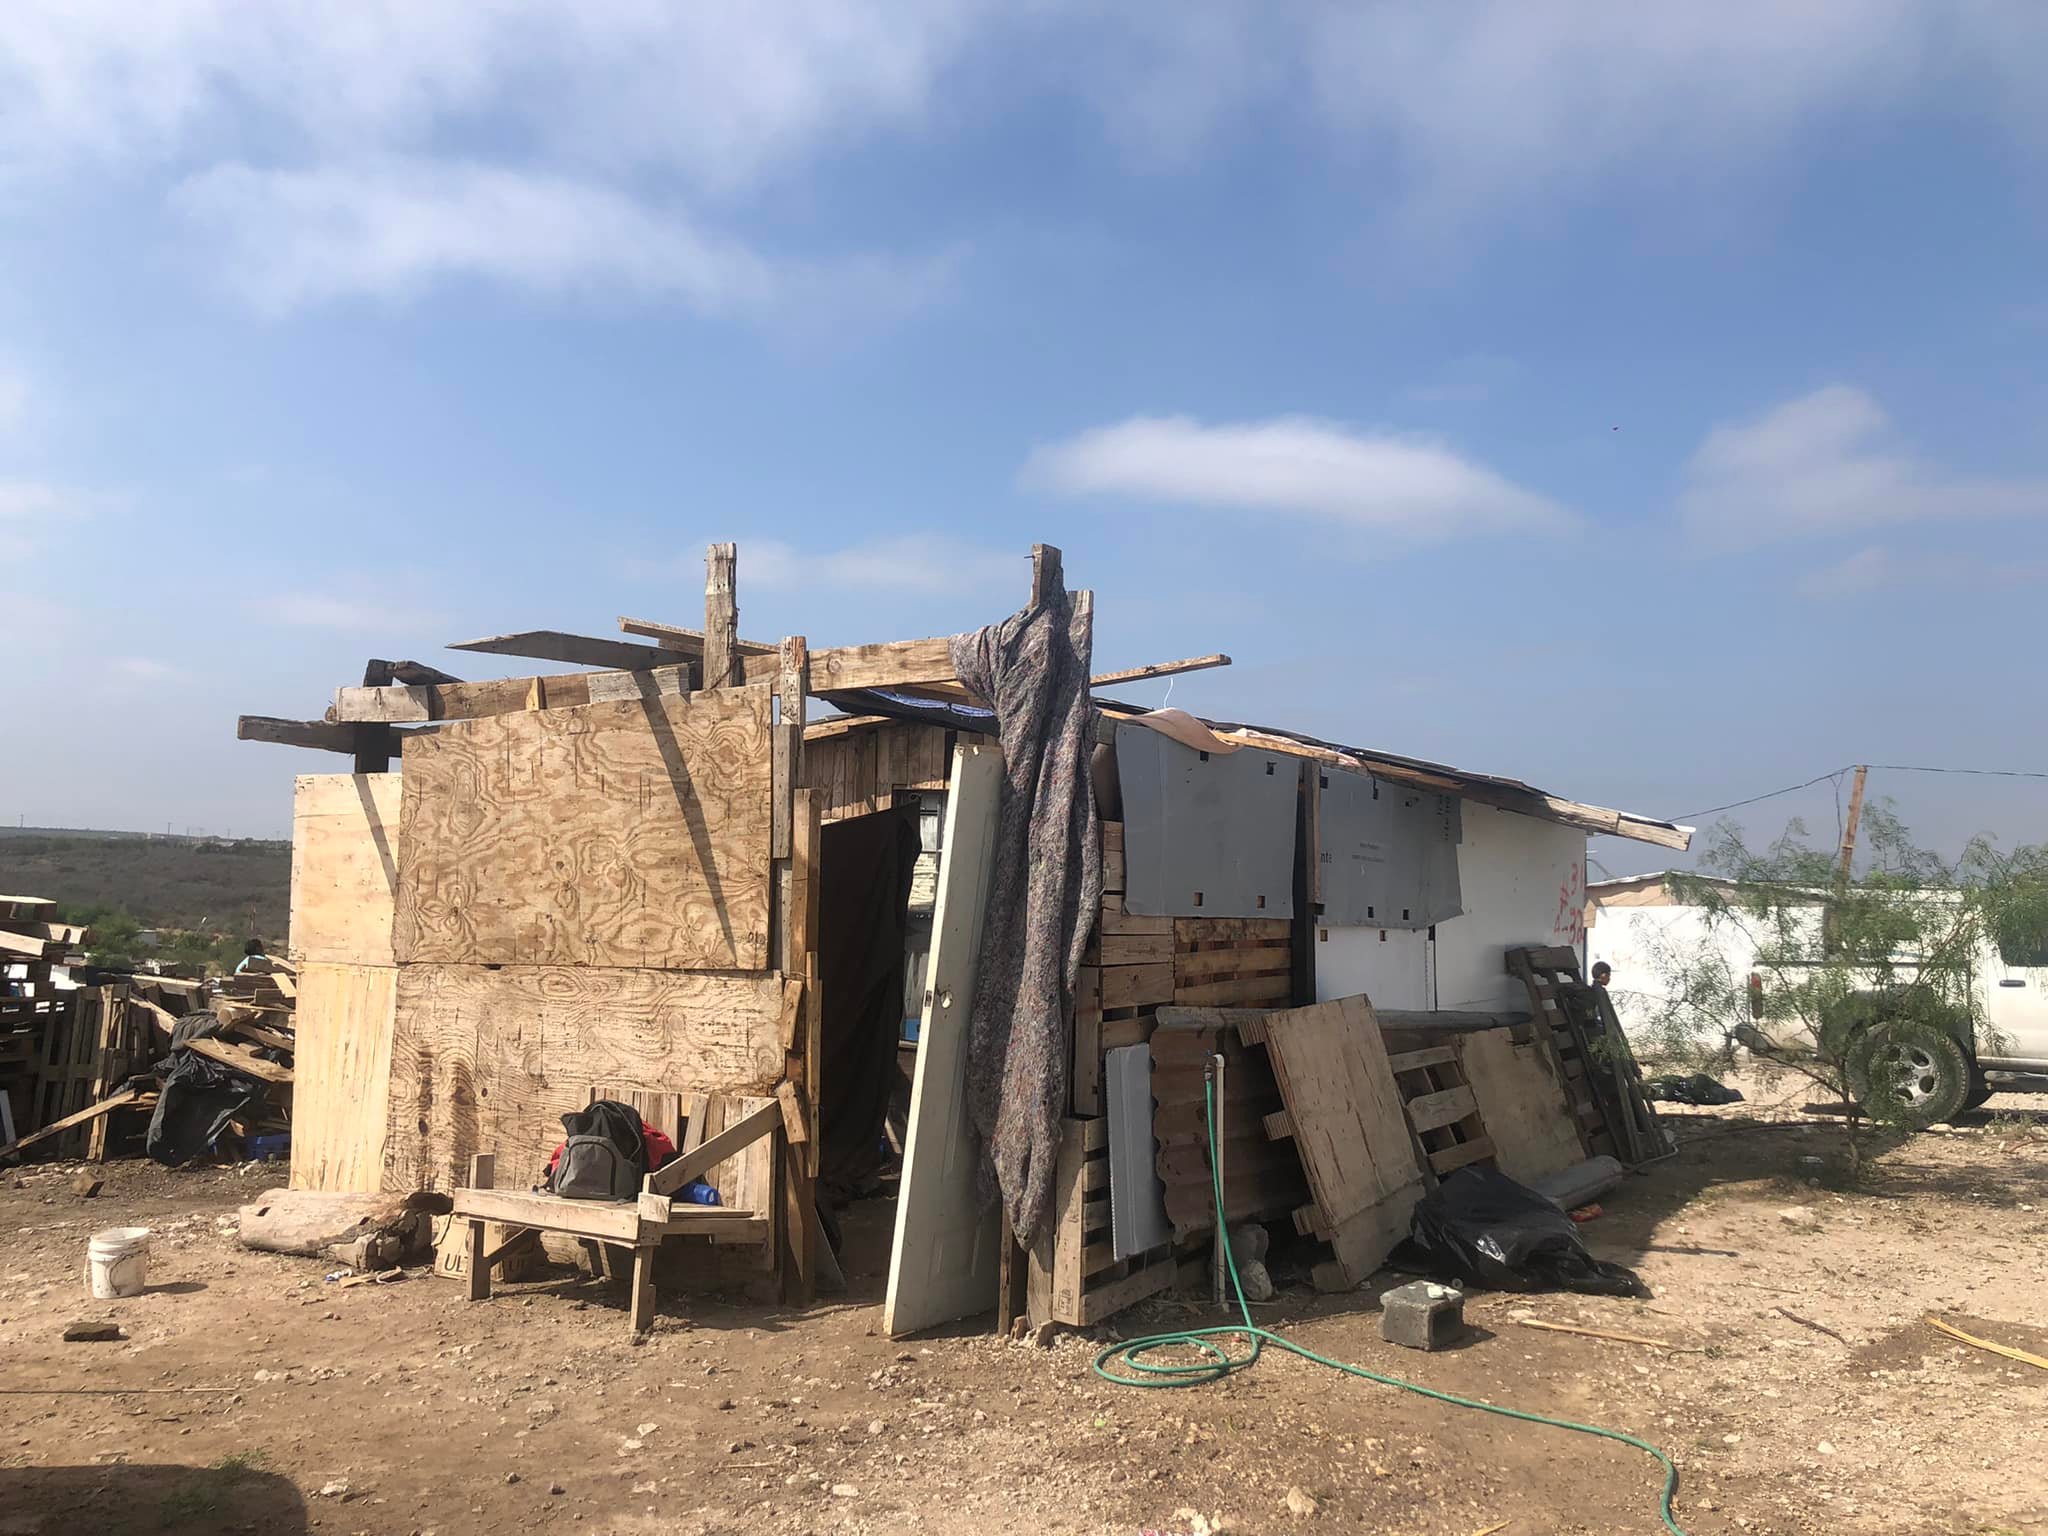 Tormenta “destapa” miseria de cientos de familias de Acuña